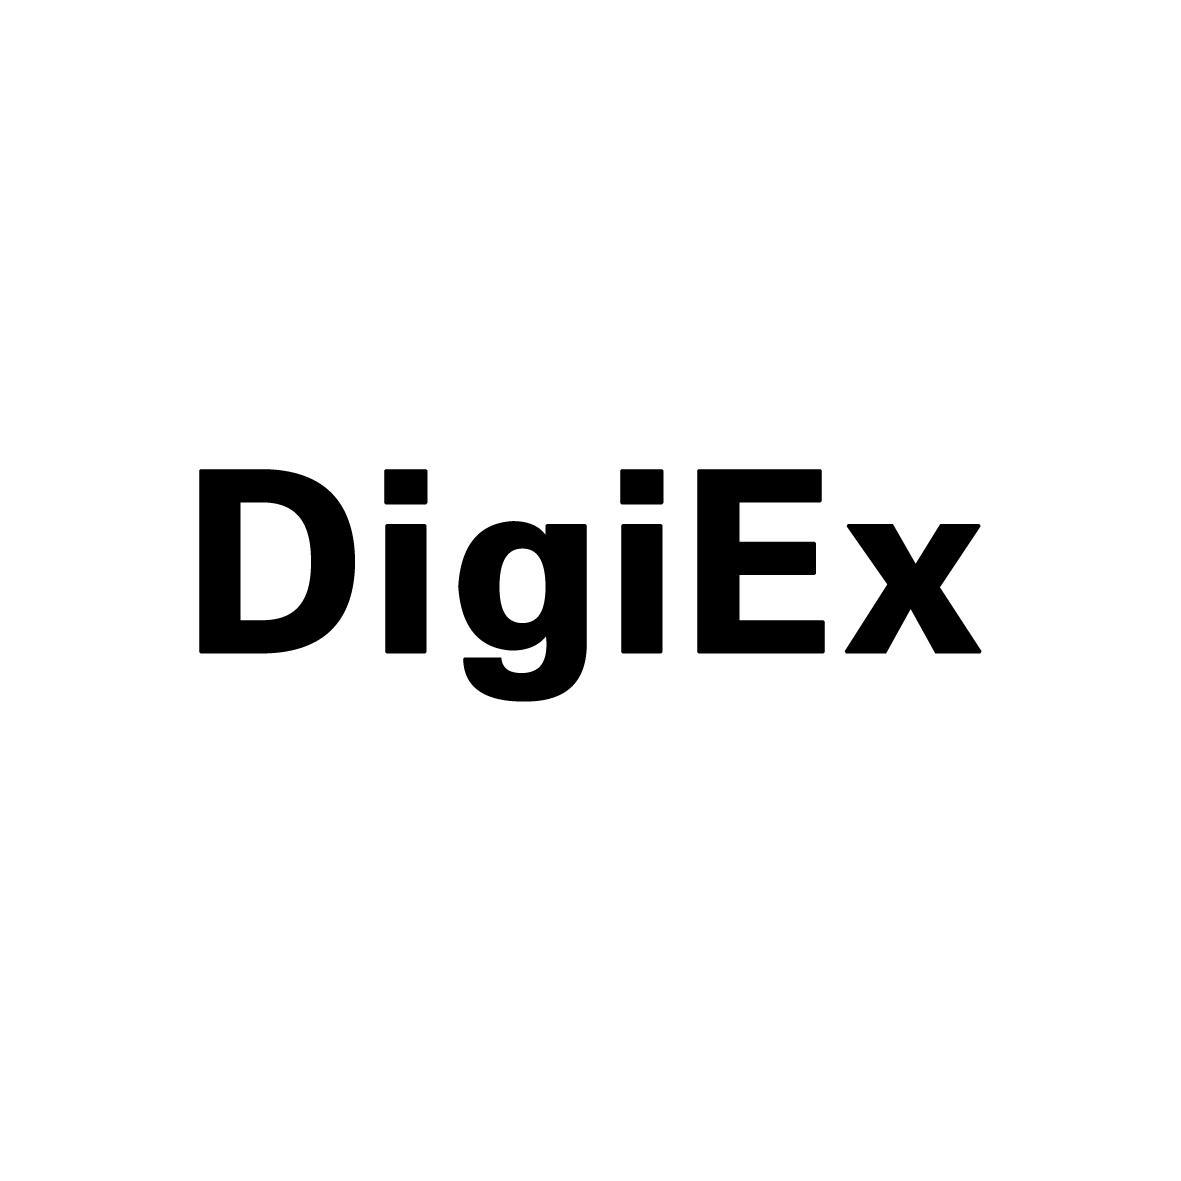 DIGIEX